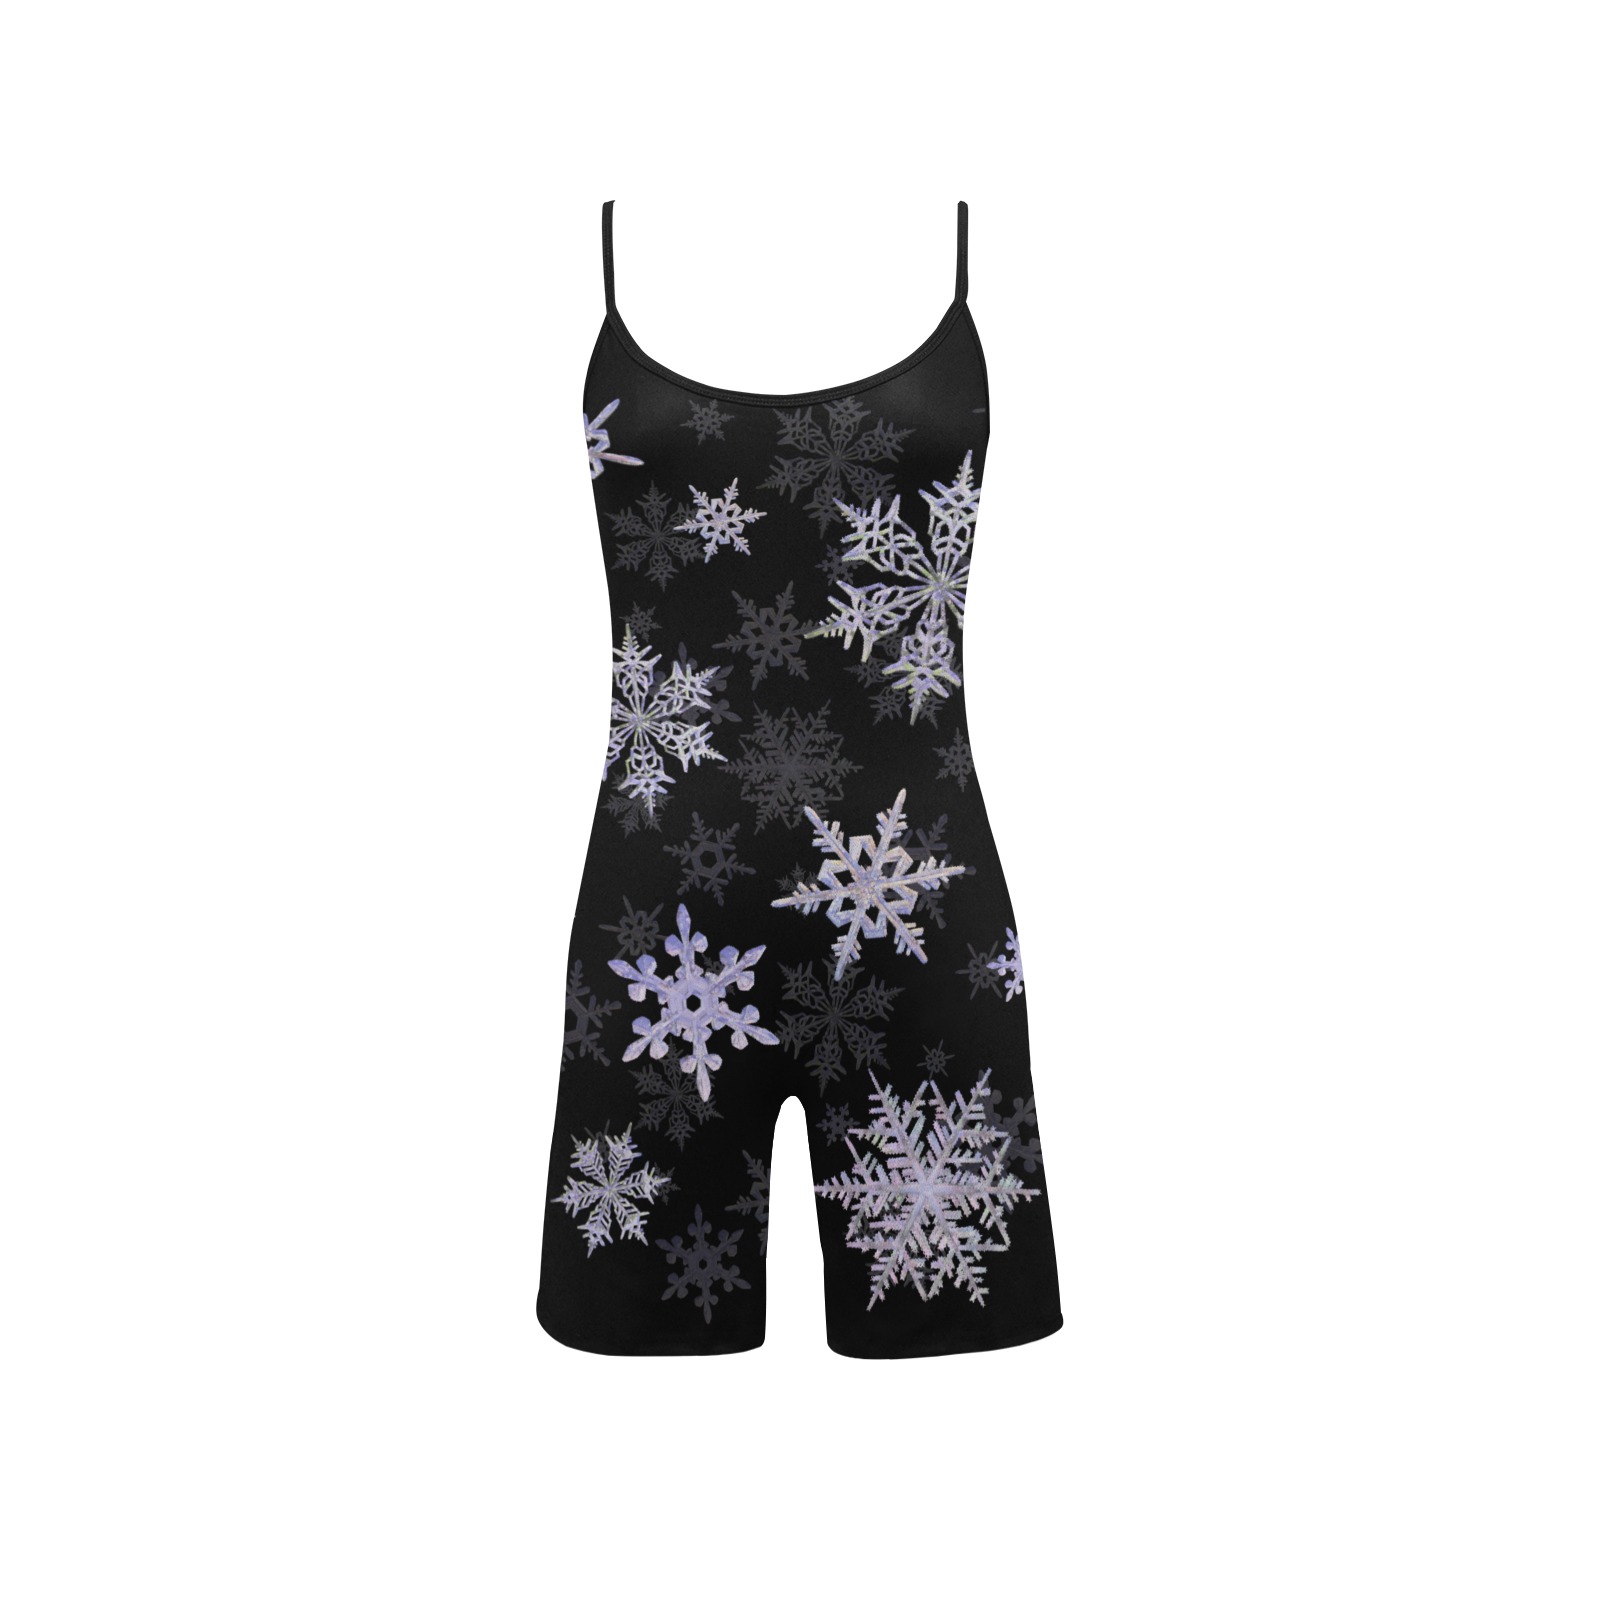 Snowflakes Winter Christmas pattern on black Women's Short Yoga Bodysuit